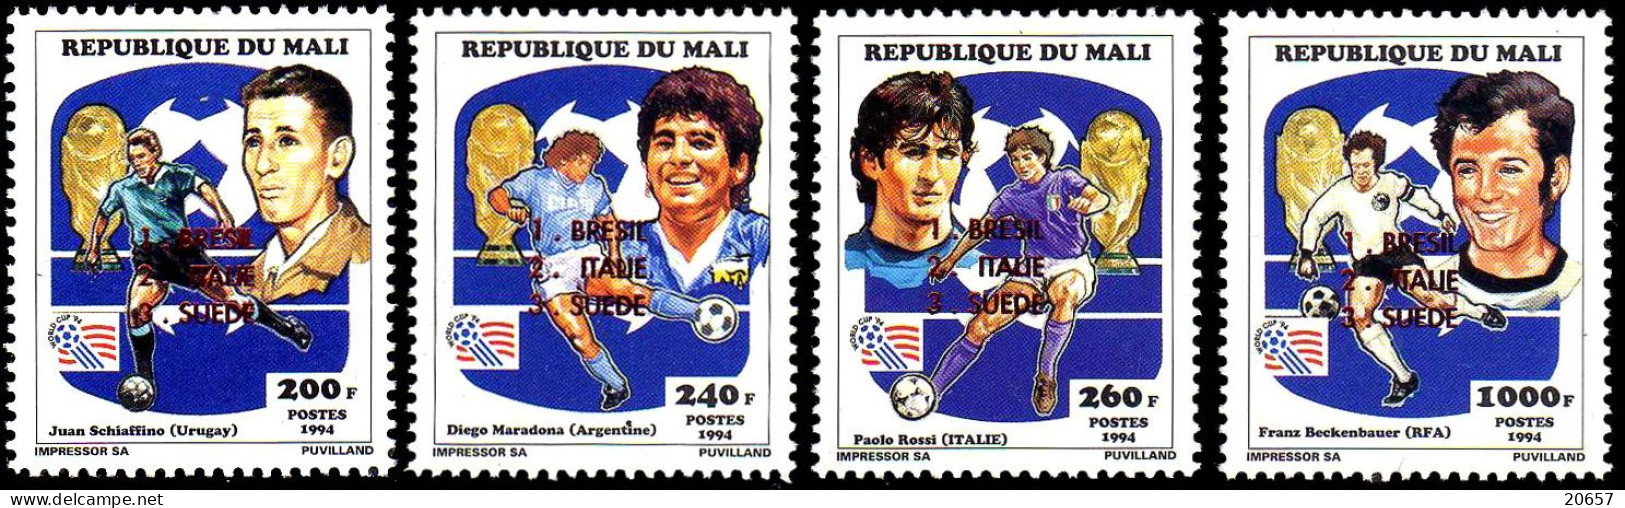 Mali 0706/09 Mondial Football USA 94, Joueurs Uruguay, Argentina, Italia, Germany, Surch Vainqueurs - 1994 – USA